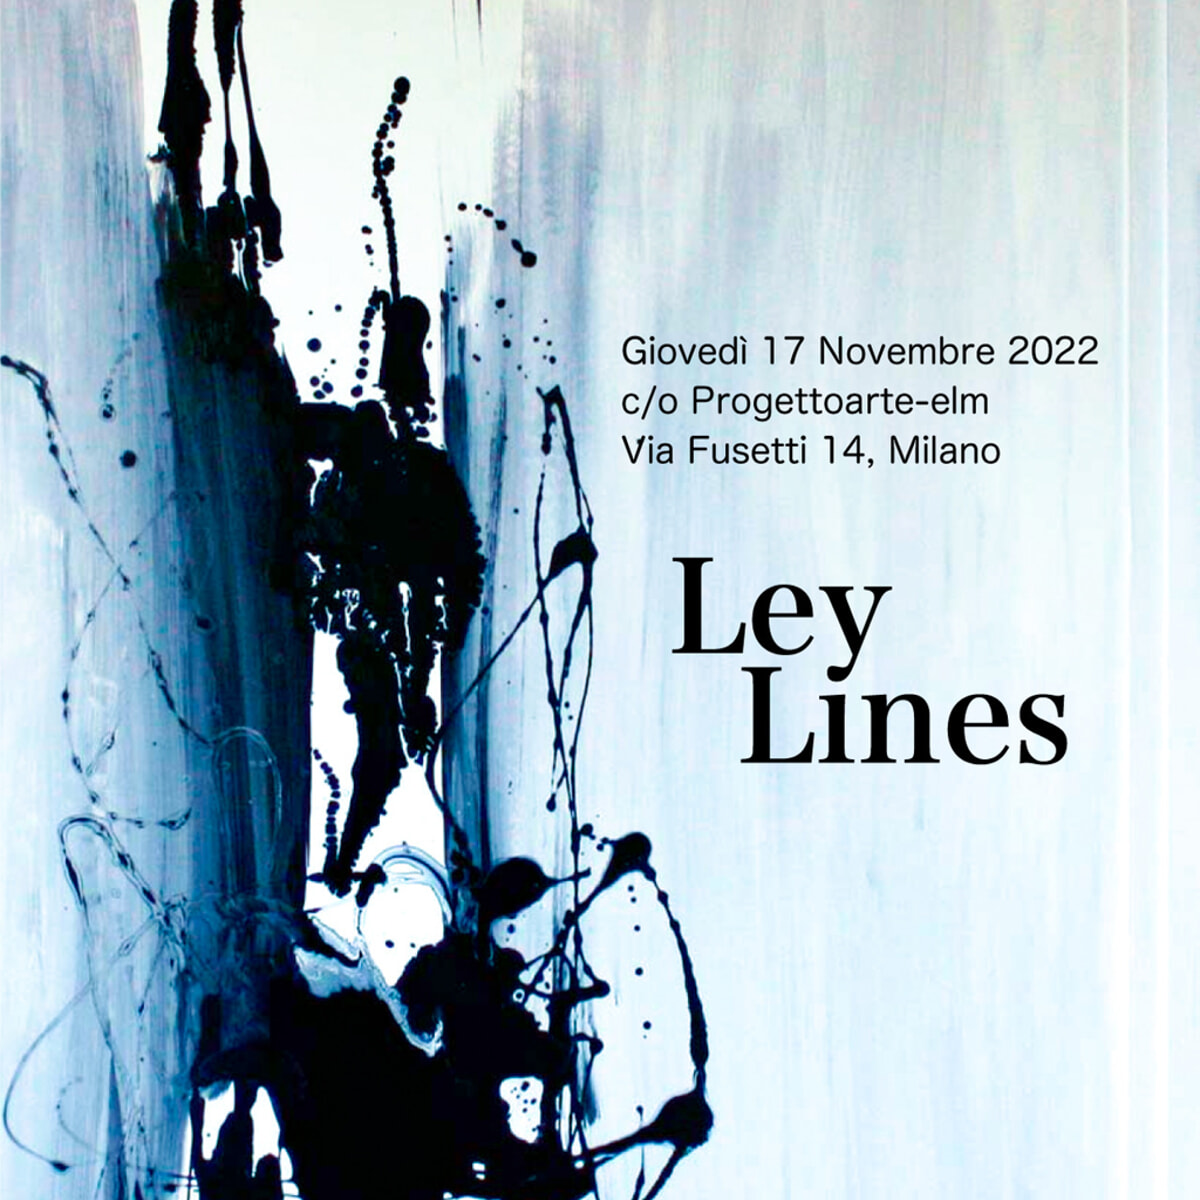 Ley lines – live art performance